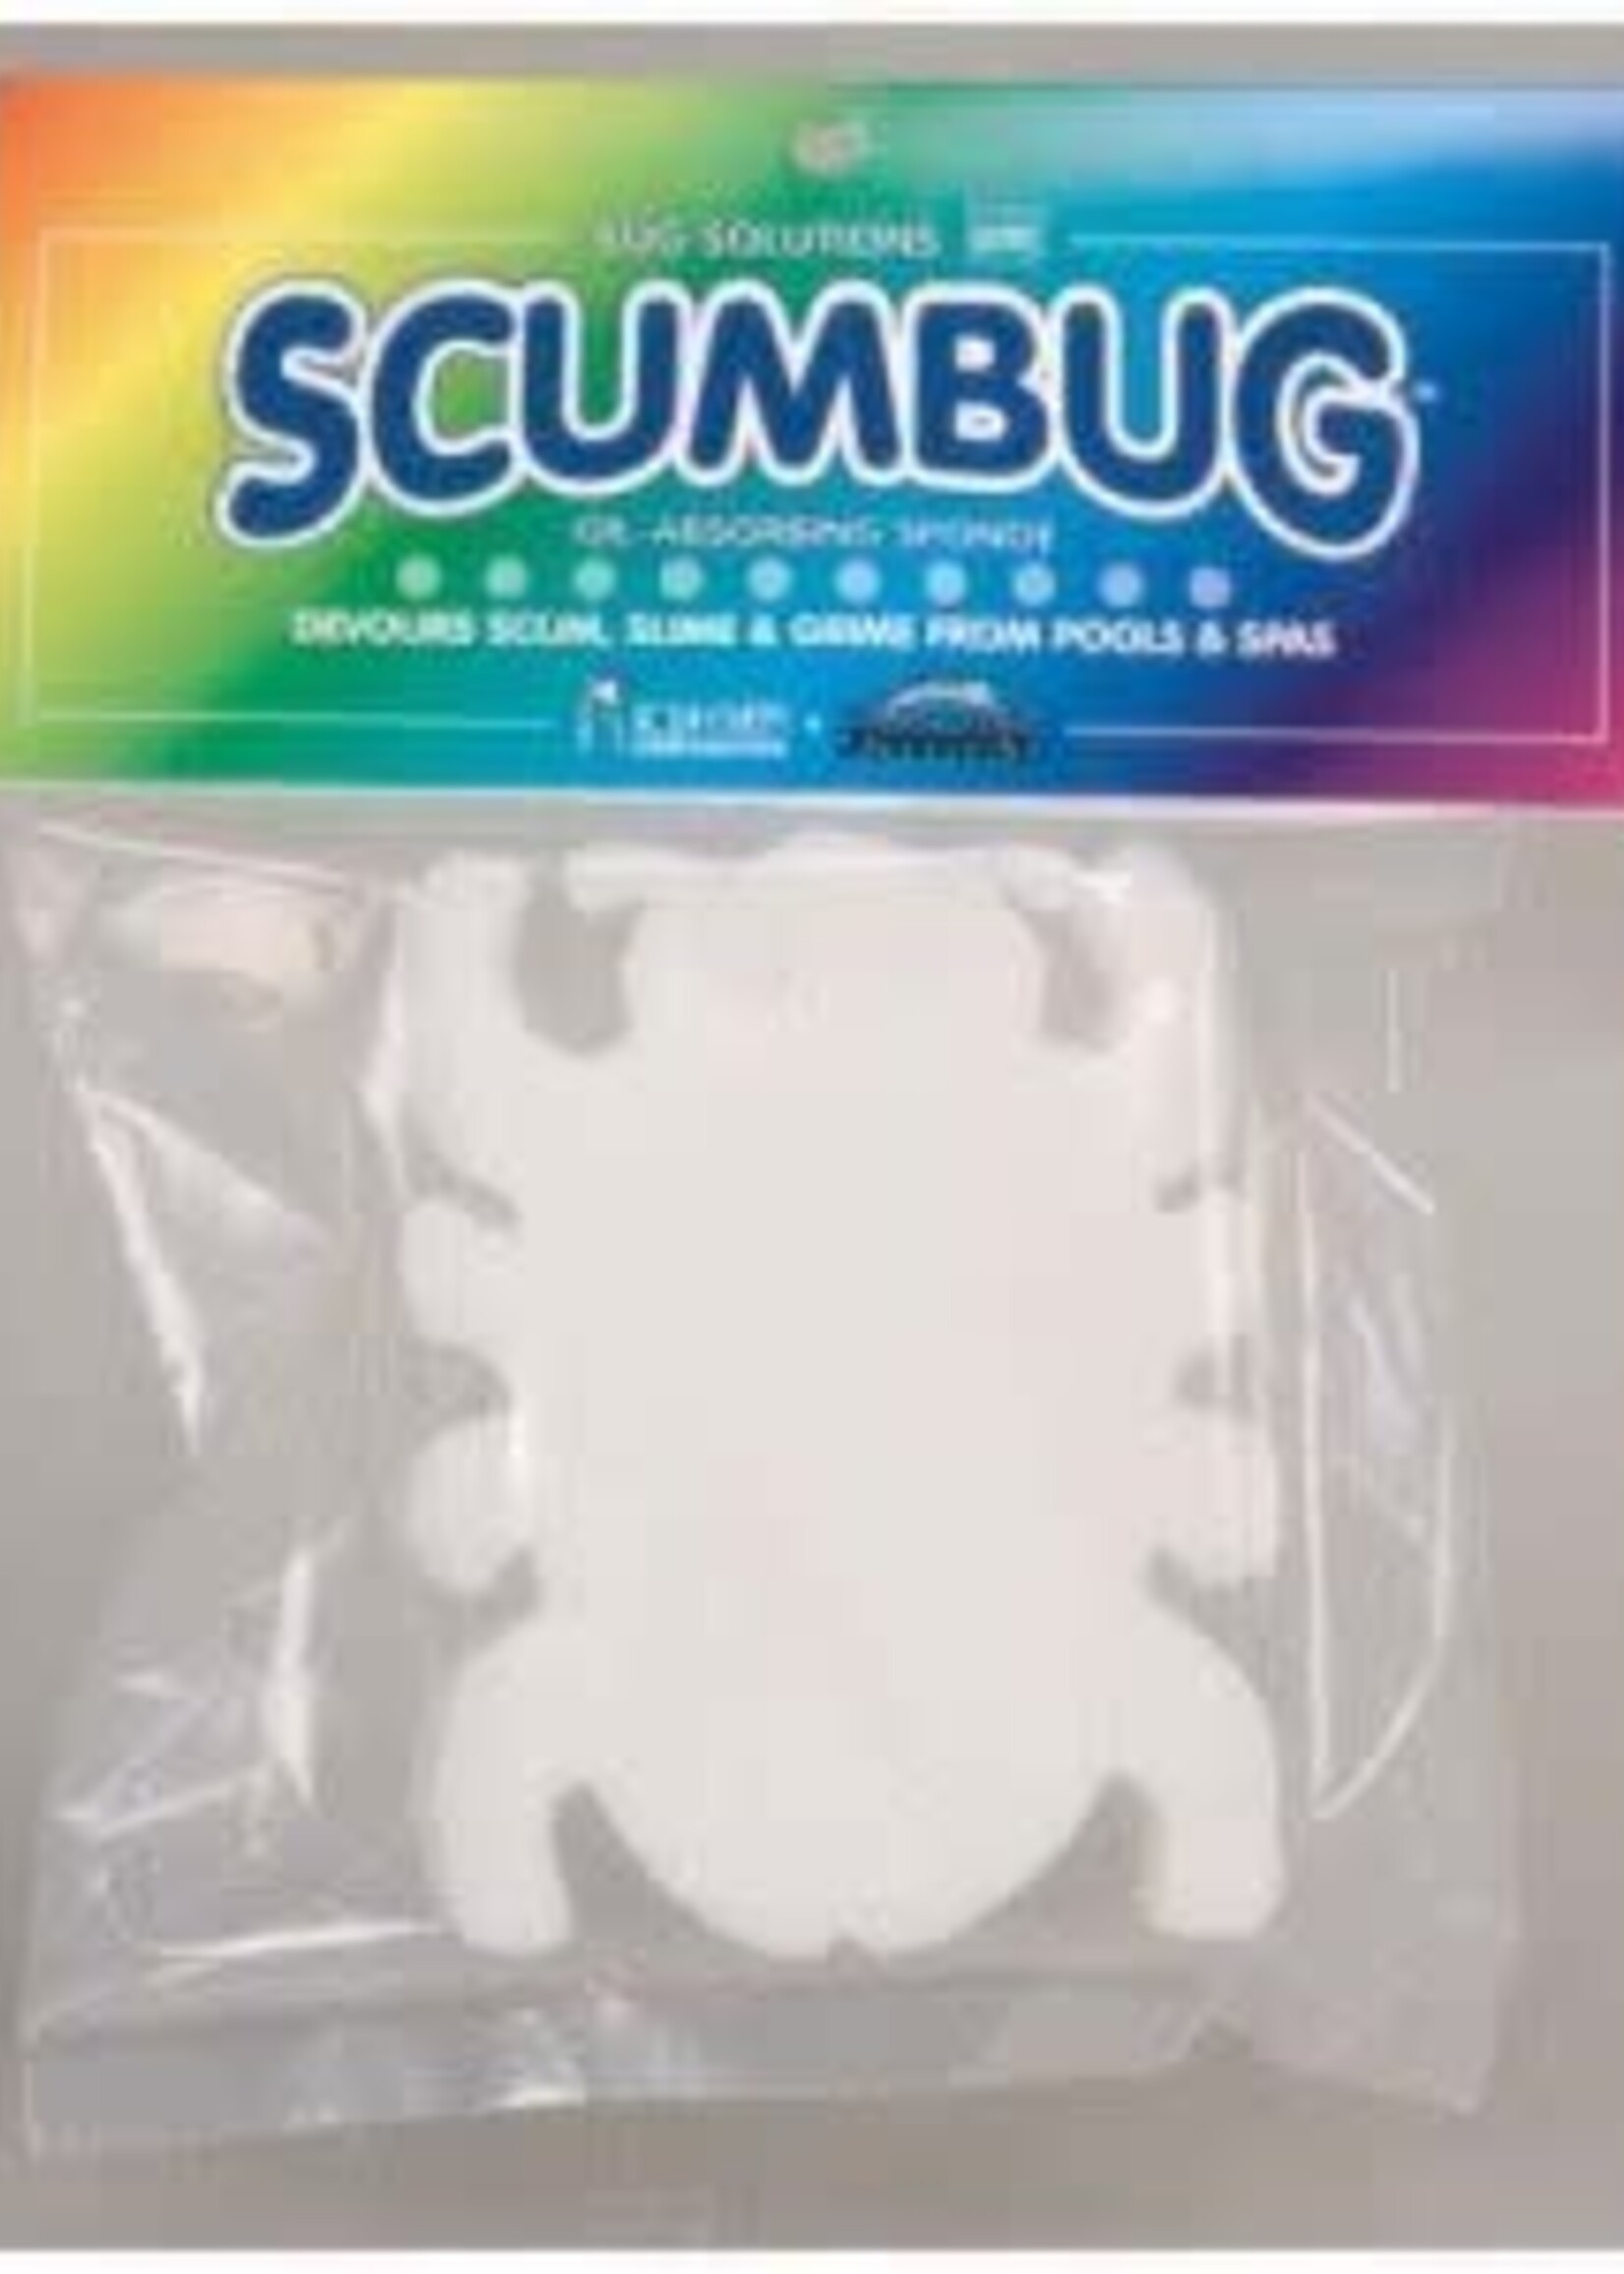 Accessories Scumbug Oil Absorbing Sponge (2 Pack)